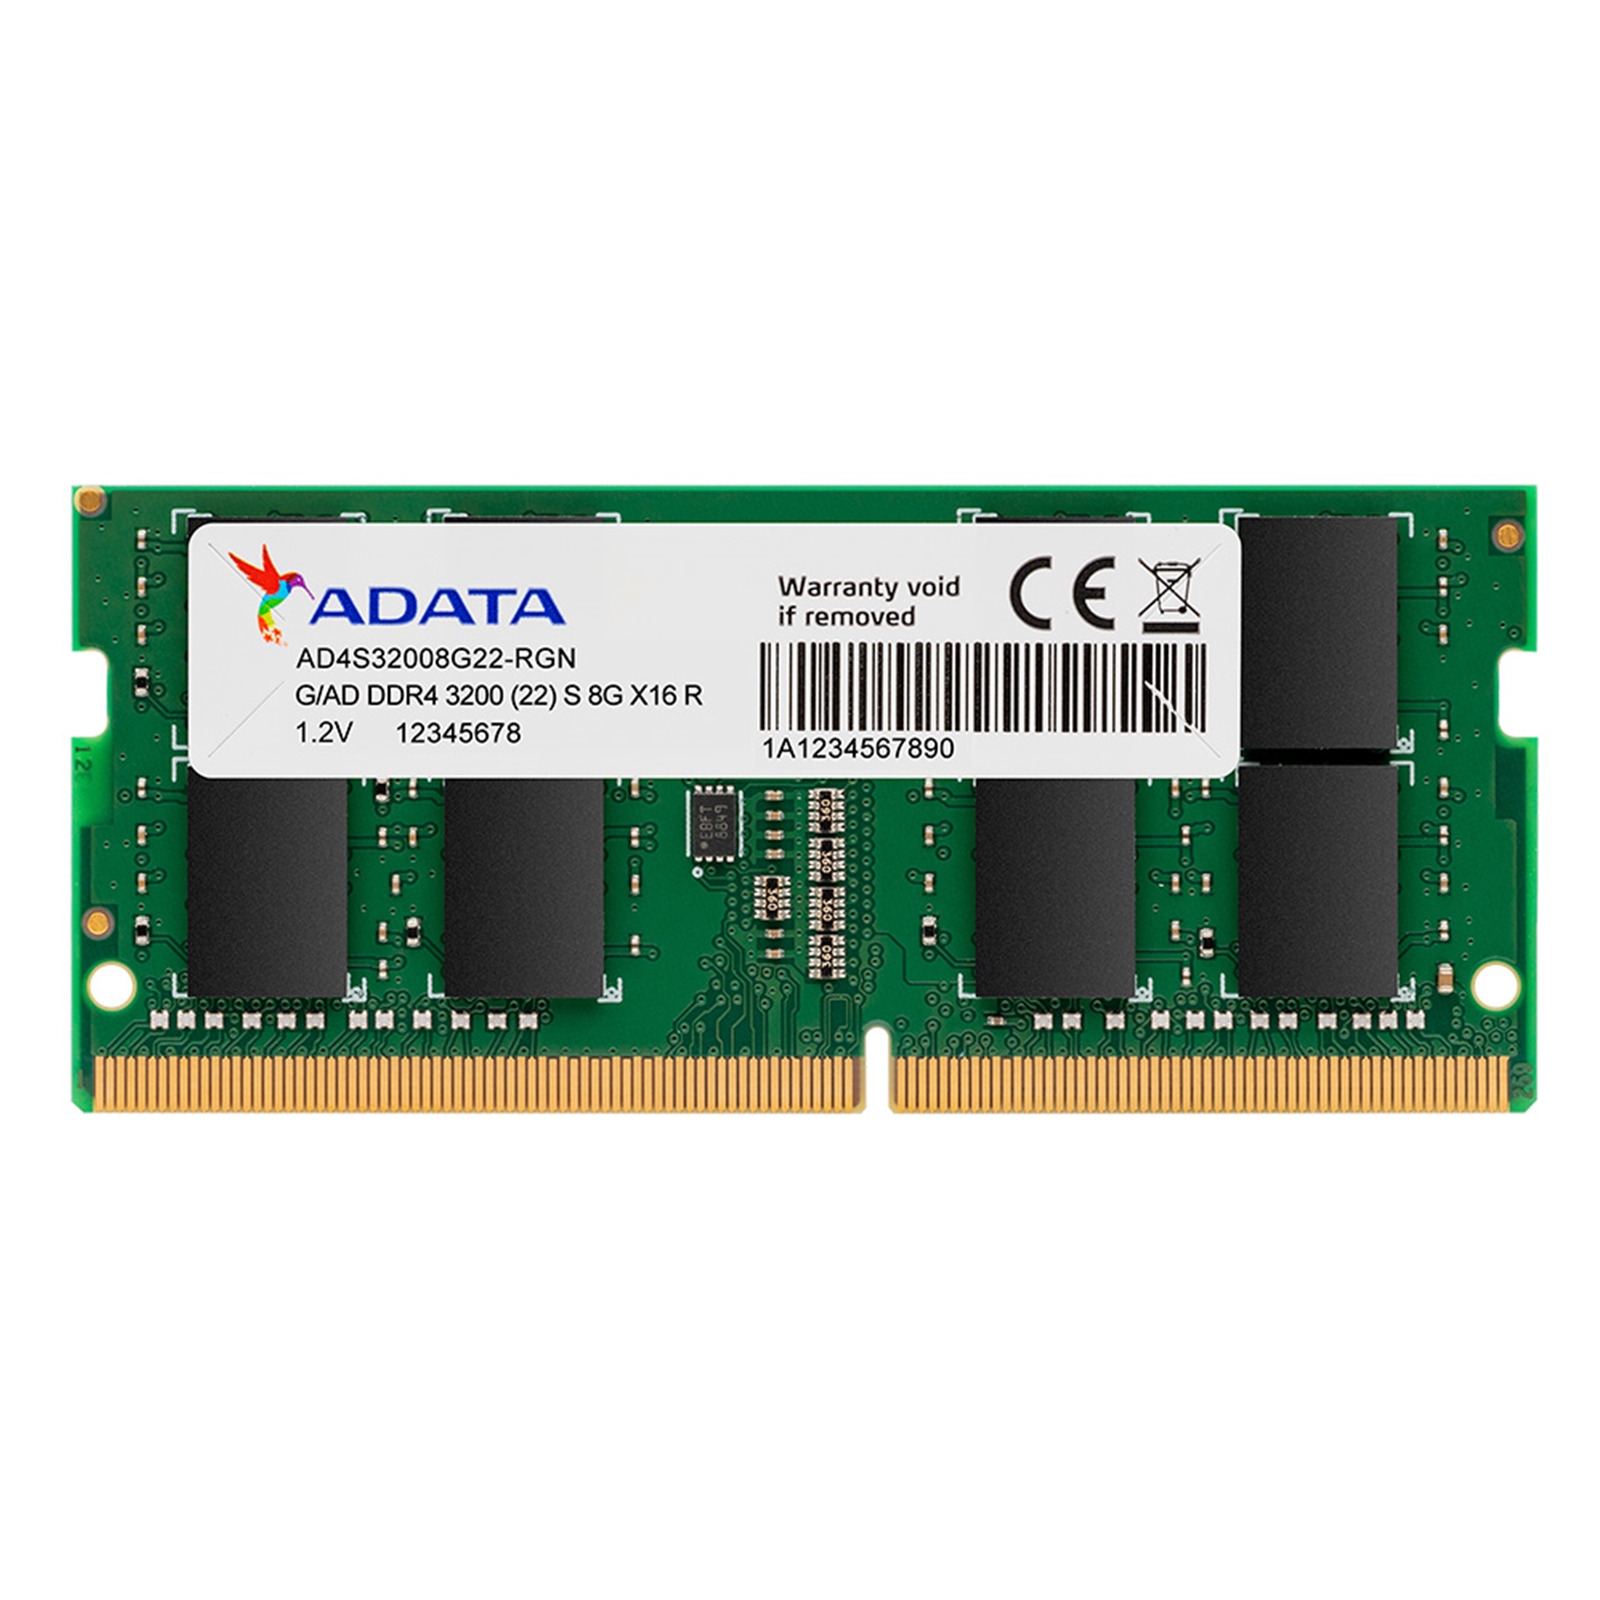 Adata Premier AD4S32008G22-SGN 8GB SODIMM System Memory